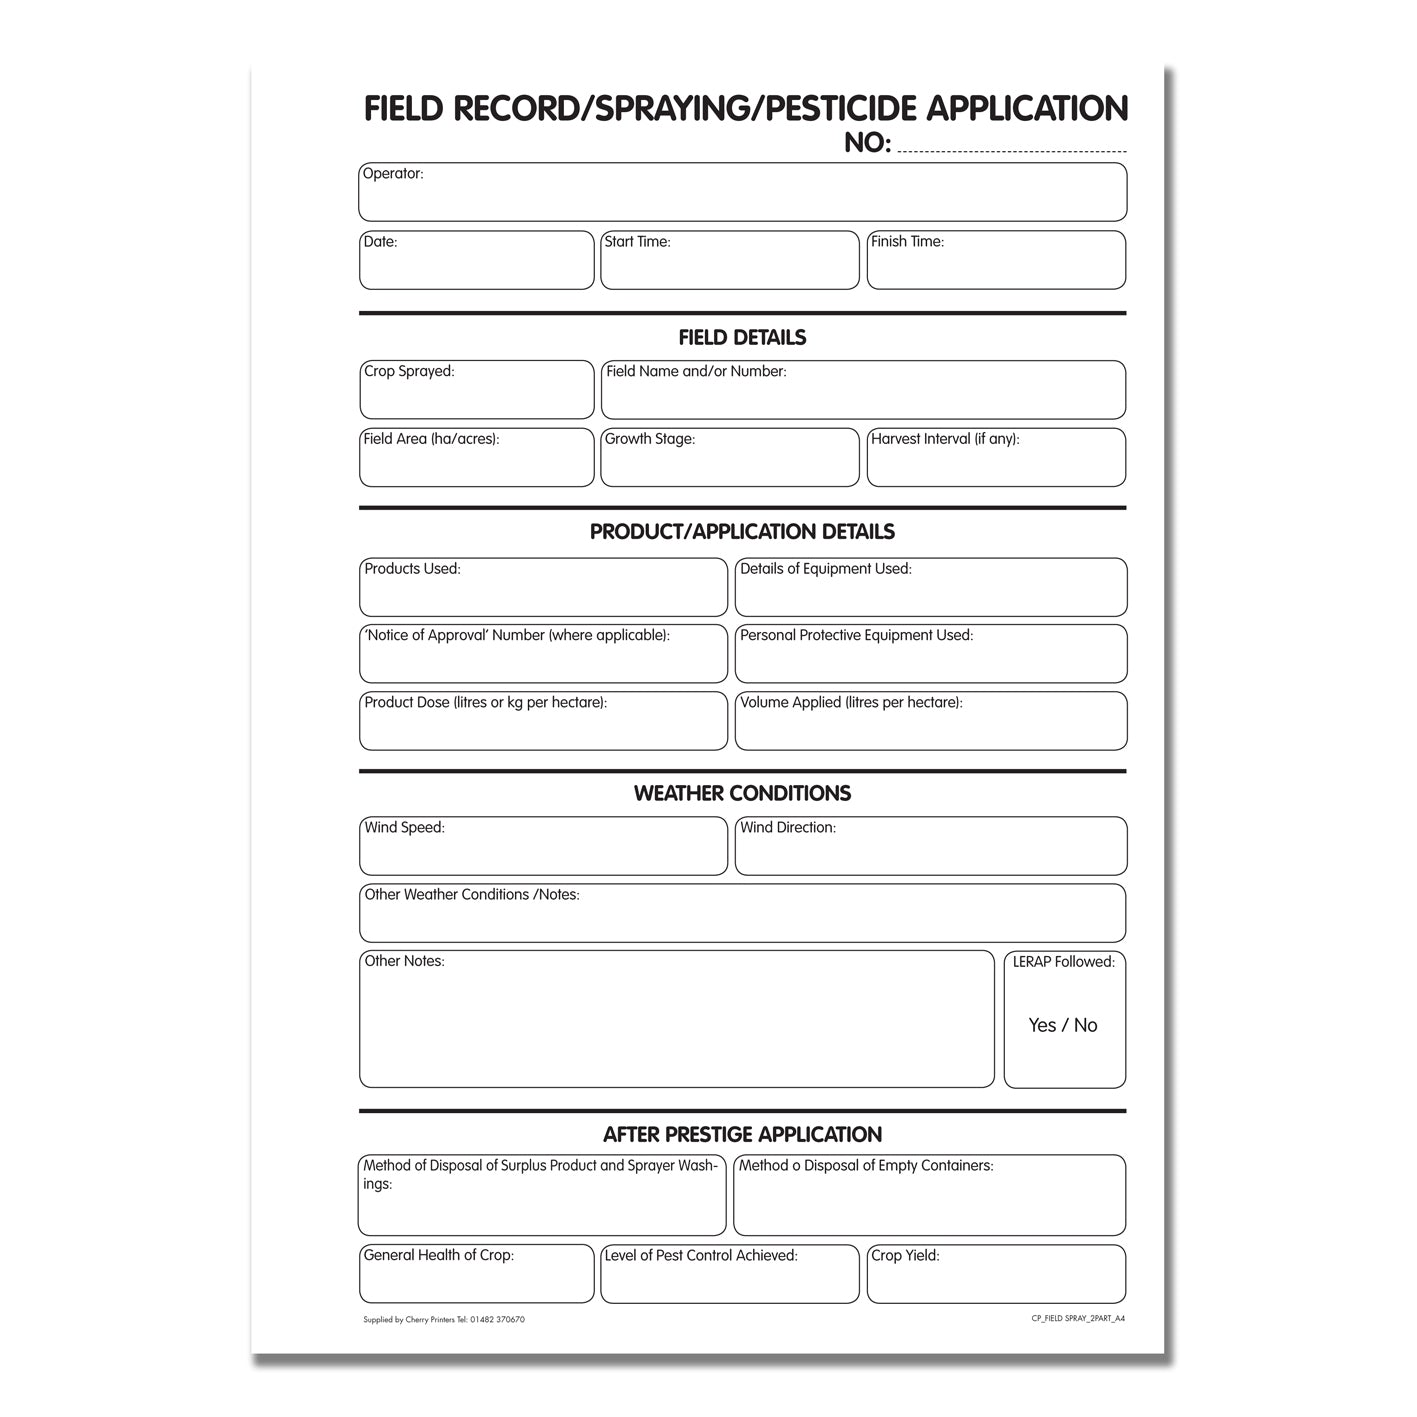 NCR Field Spray/Pesticide Application Duplicate Book A5